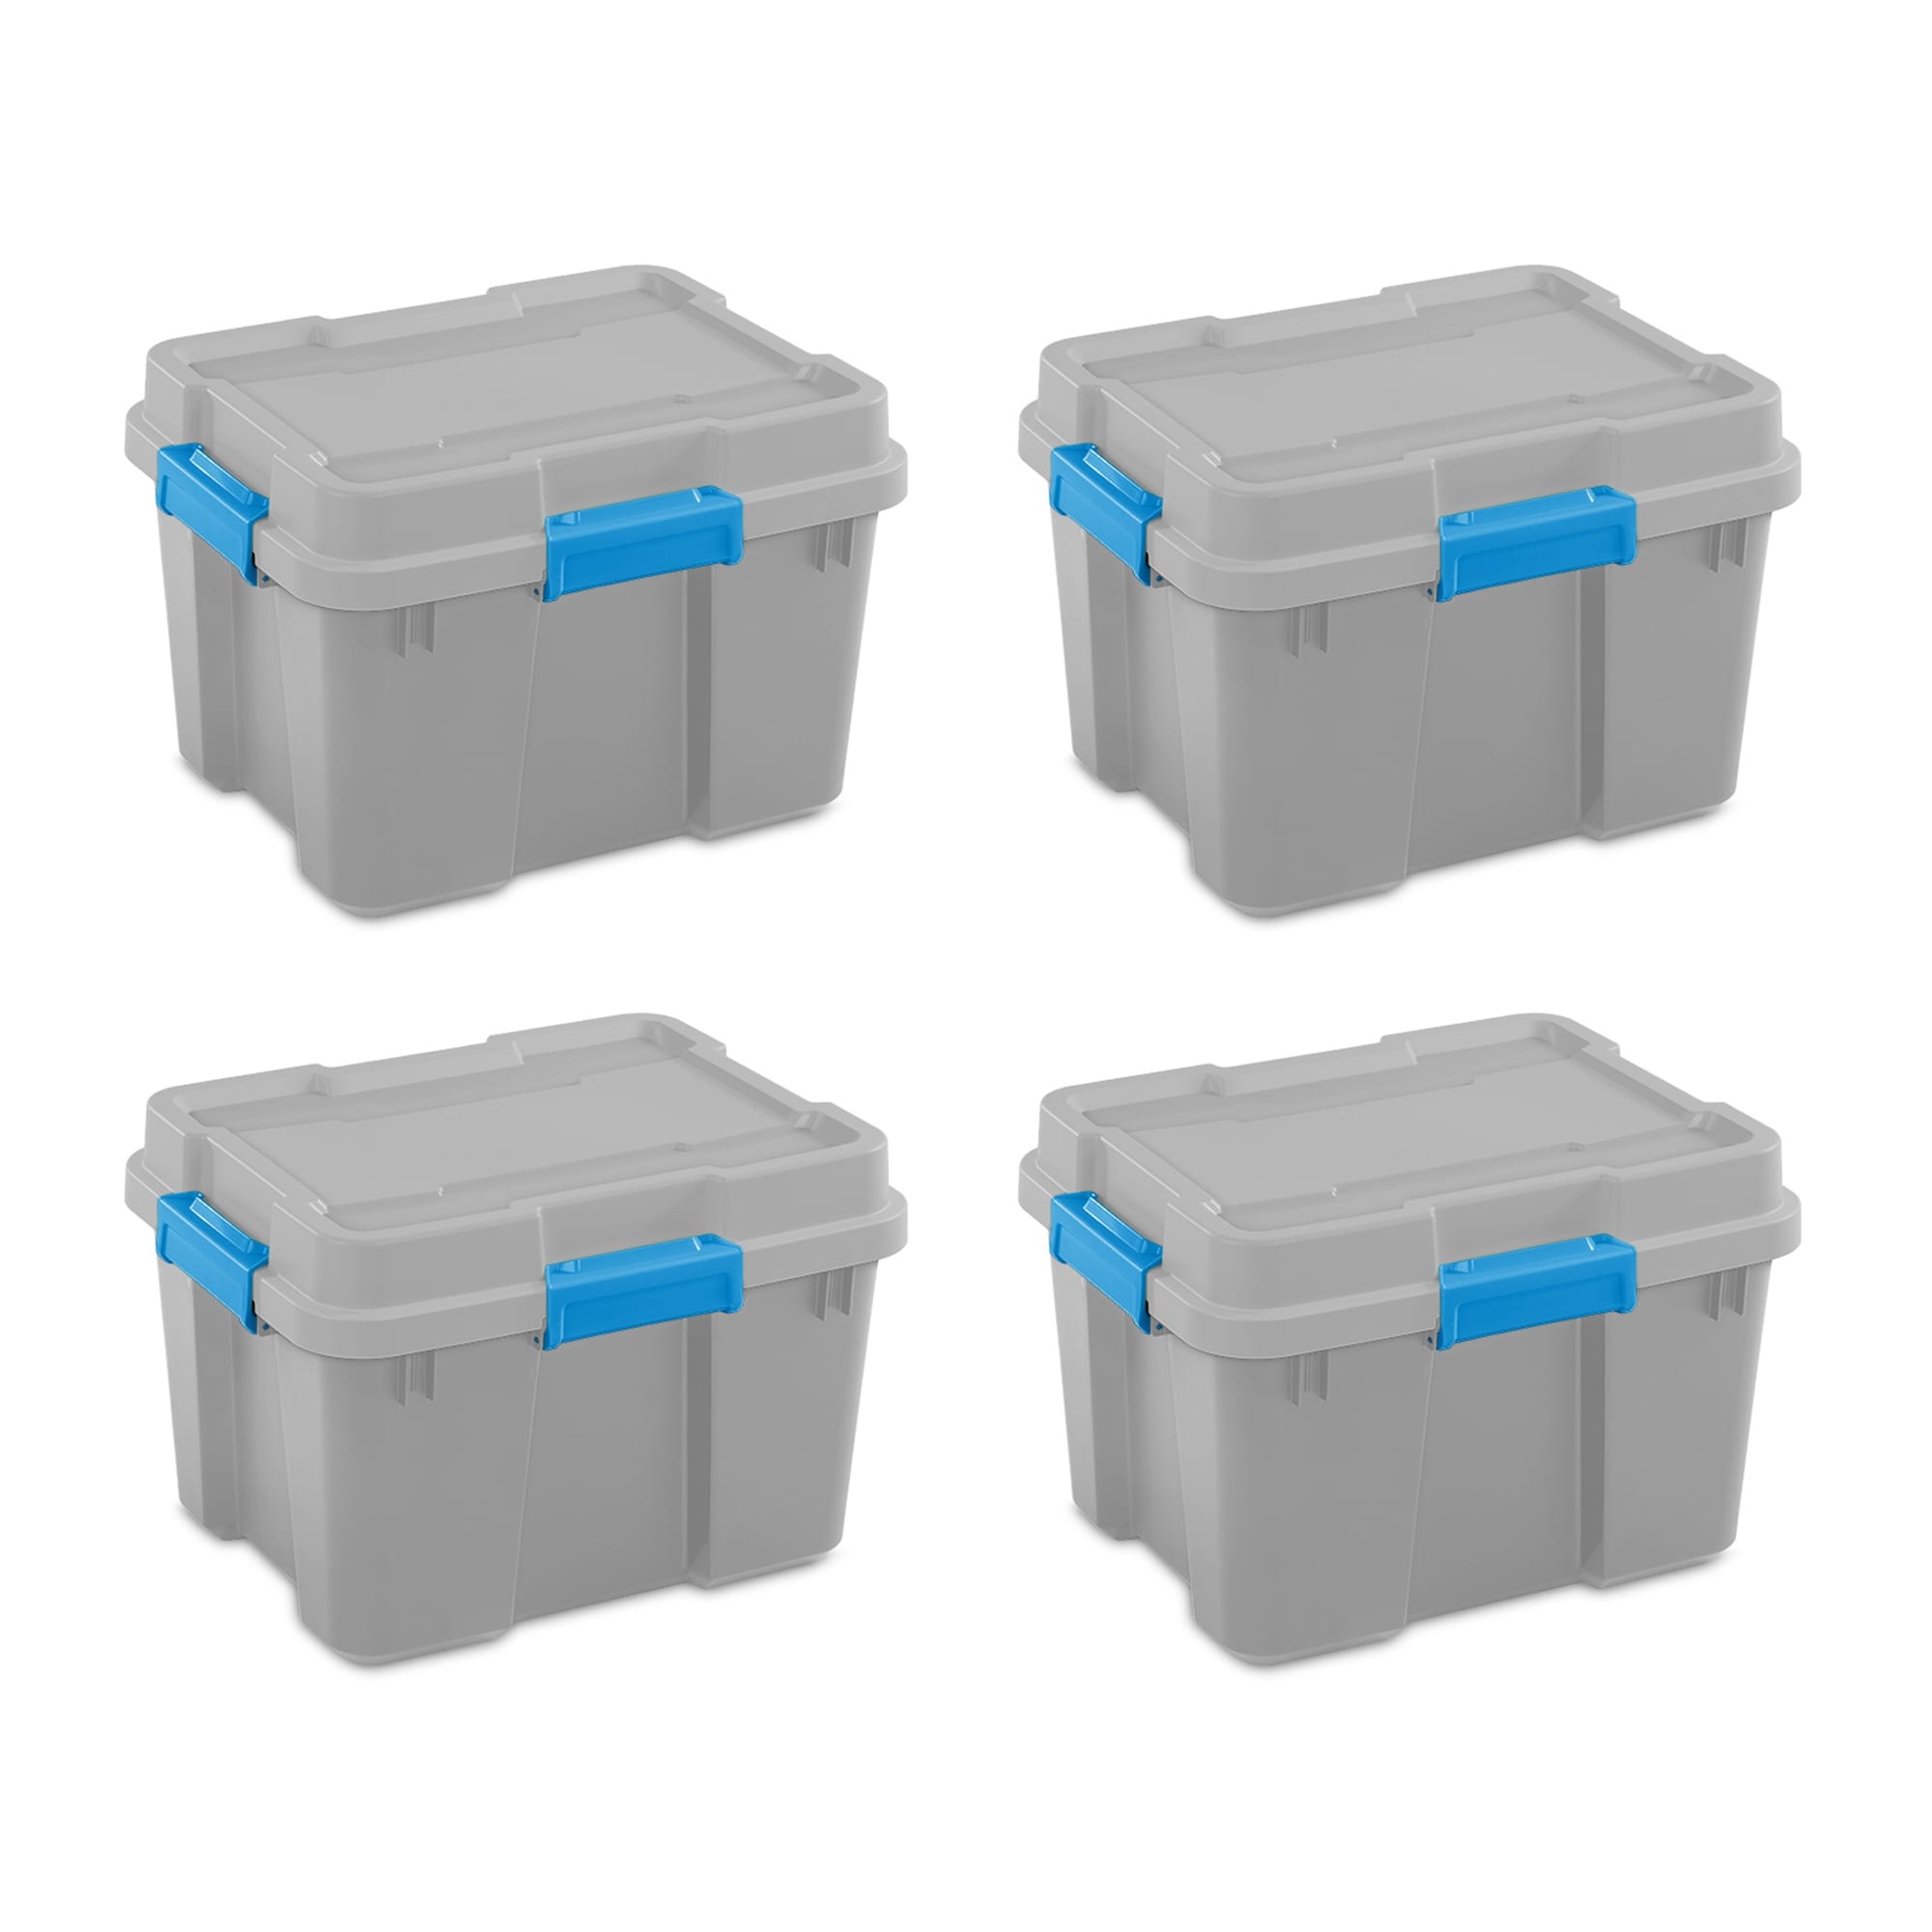 https://ak1.ostkcdn.com/images/products/is/images/direct/6b6c5edfa379d23571cedfca2da4935776040dc4/Sterilite-20-Gallon-Plastic-Home-Storage-Container-Tote-Box%2C-Gray-Blue%2C-%284-Pack%29.jpg